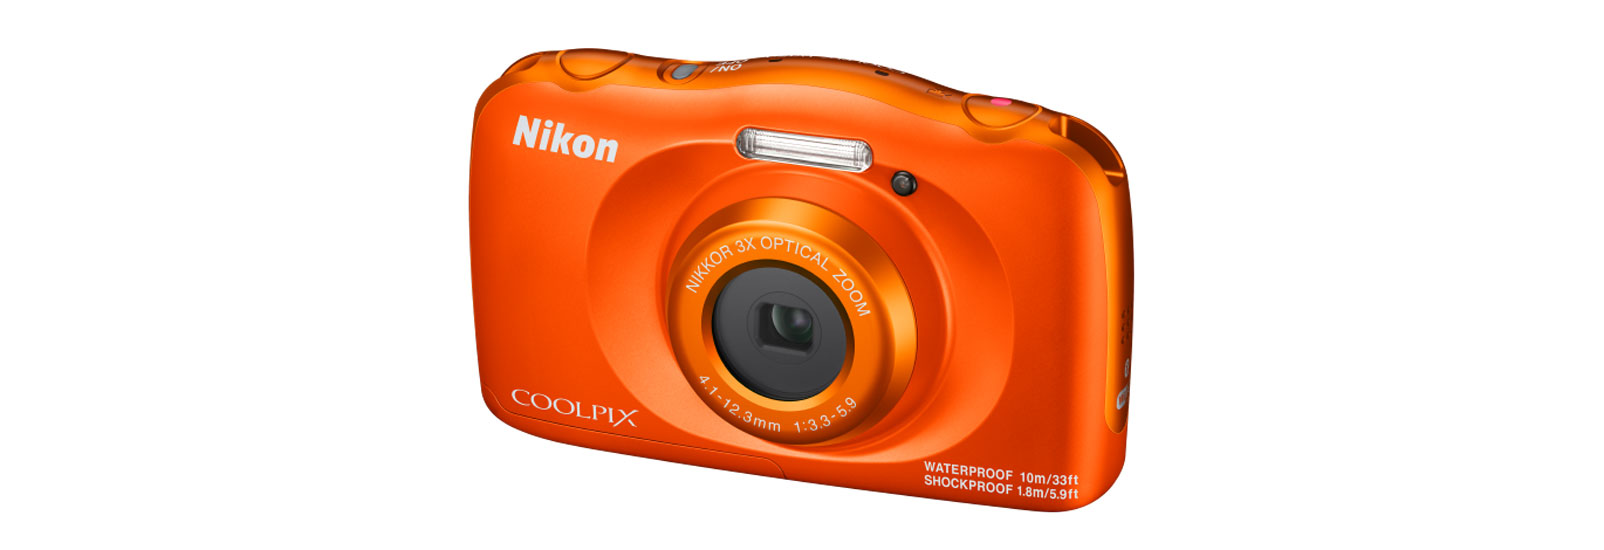 Nikon W150_9.jpg